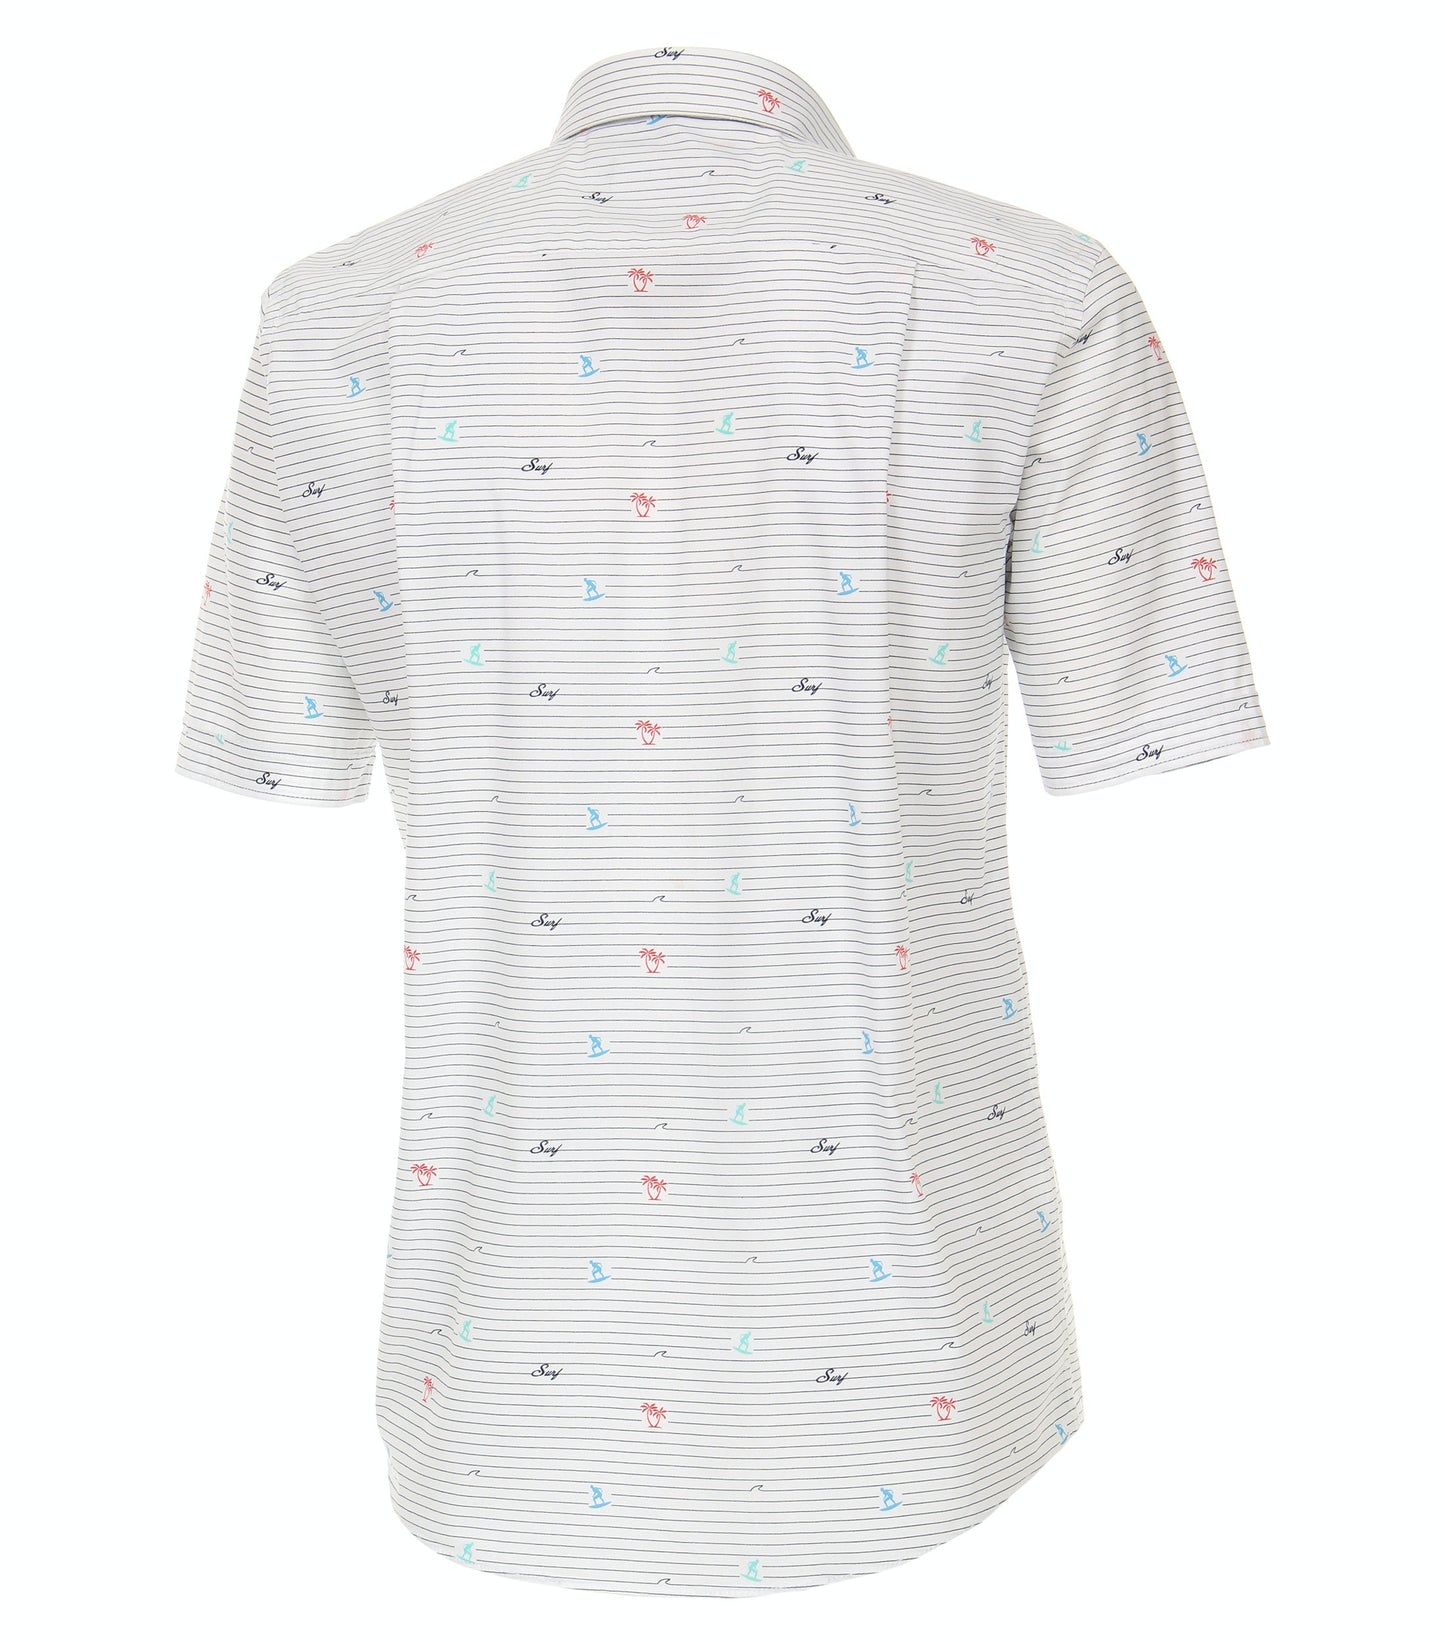 Half-sleeved shirt with fashionable print